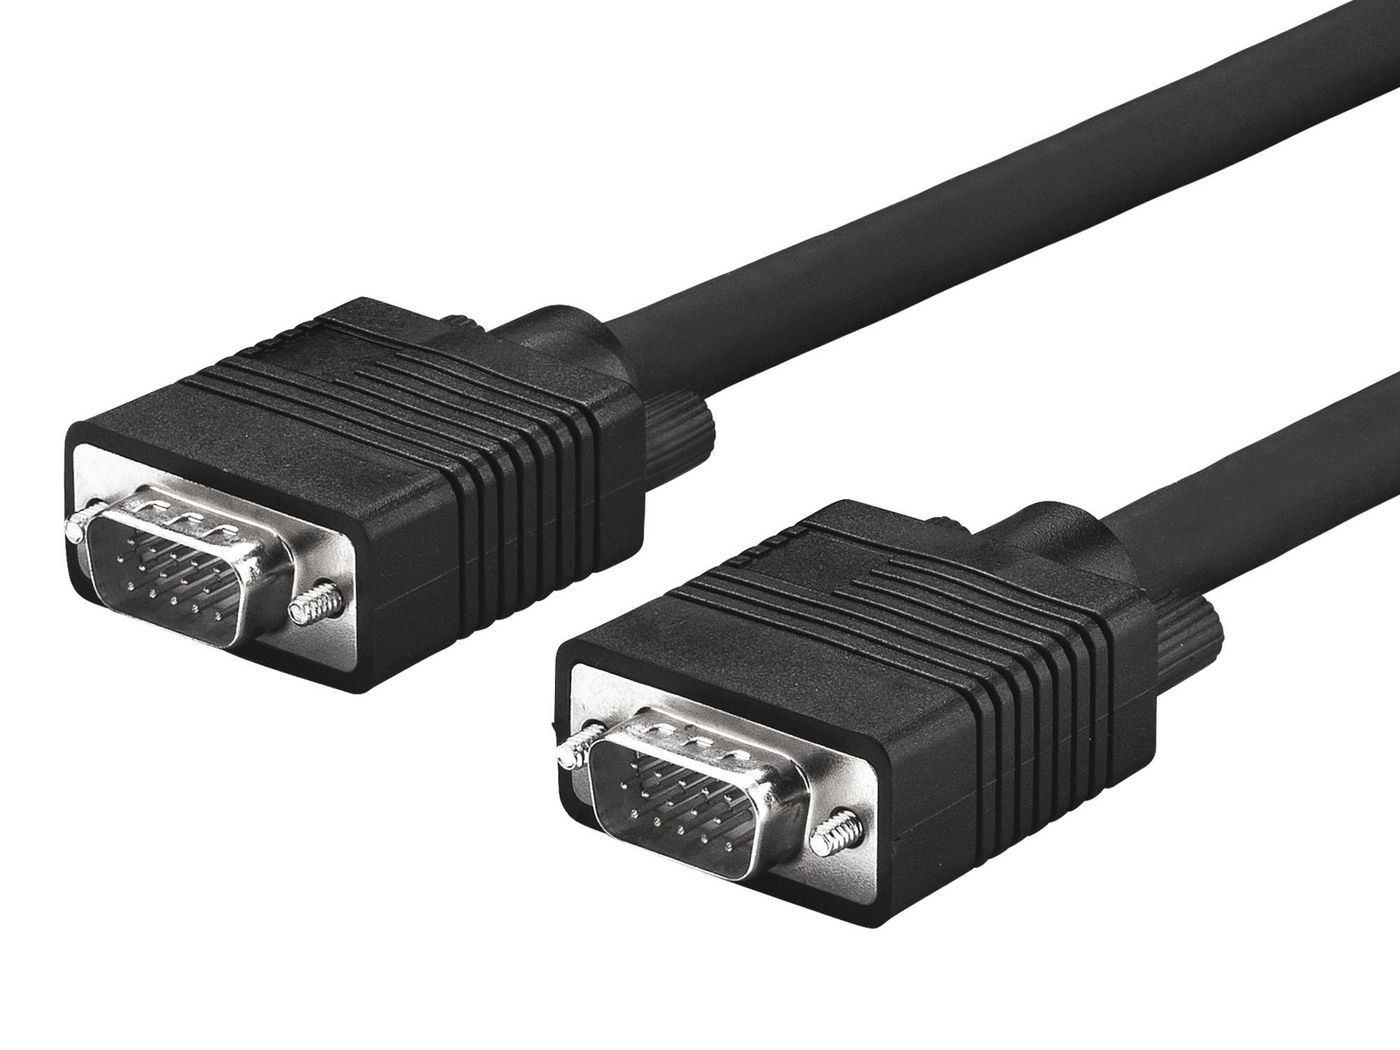 Vga Hd Cable 15 M/m 15m - Mongg15b